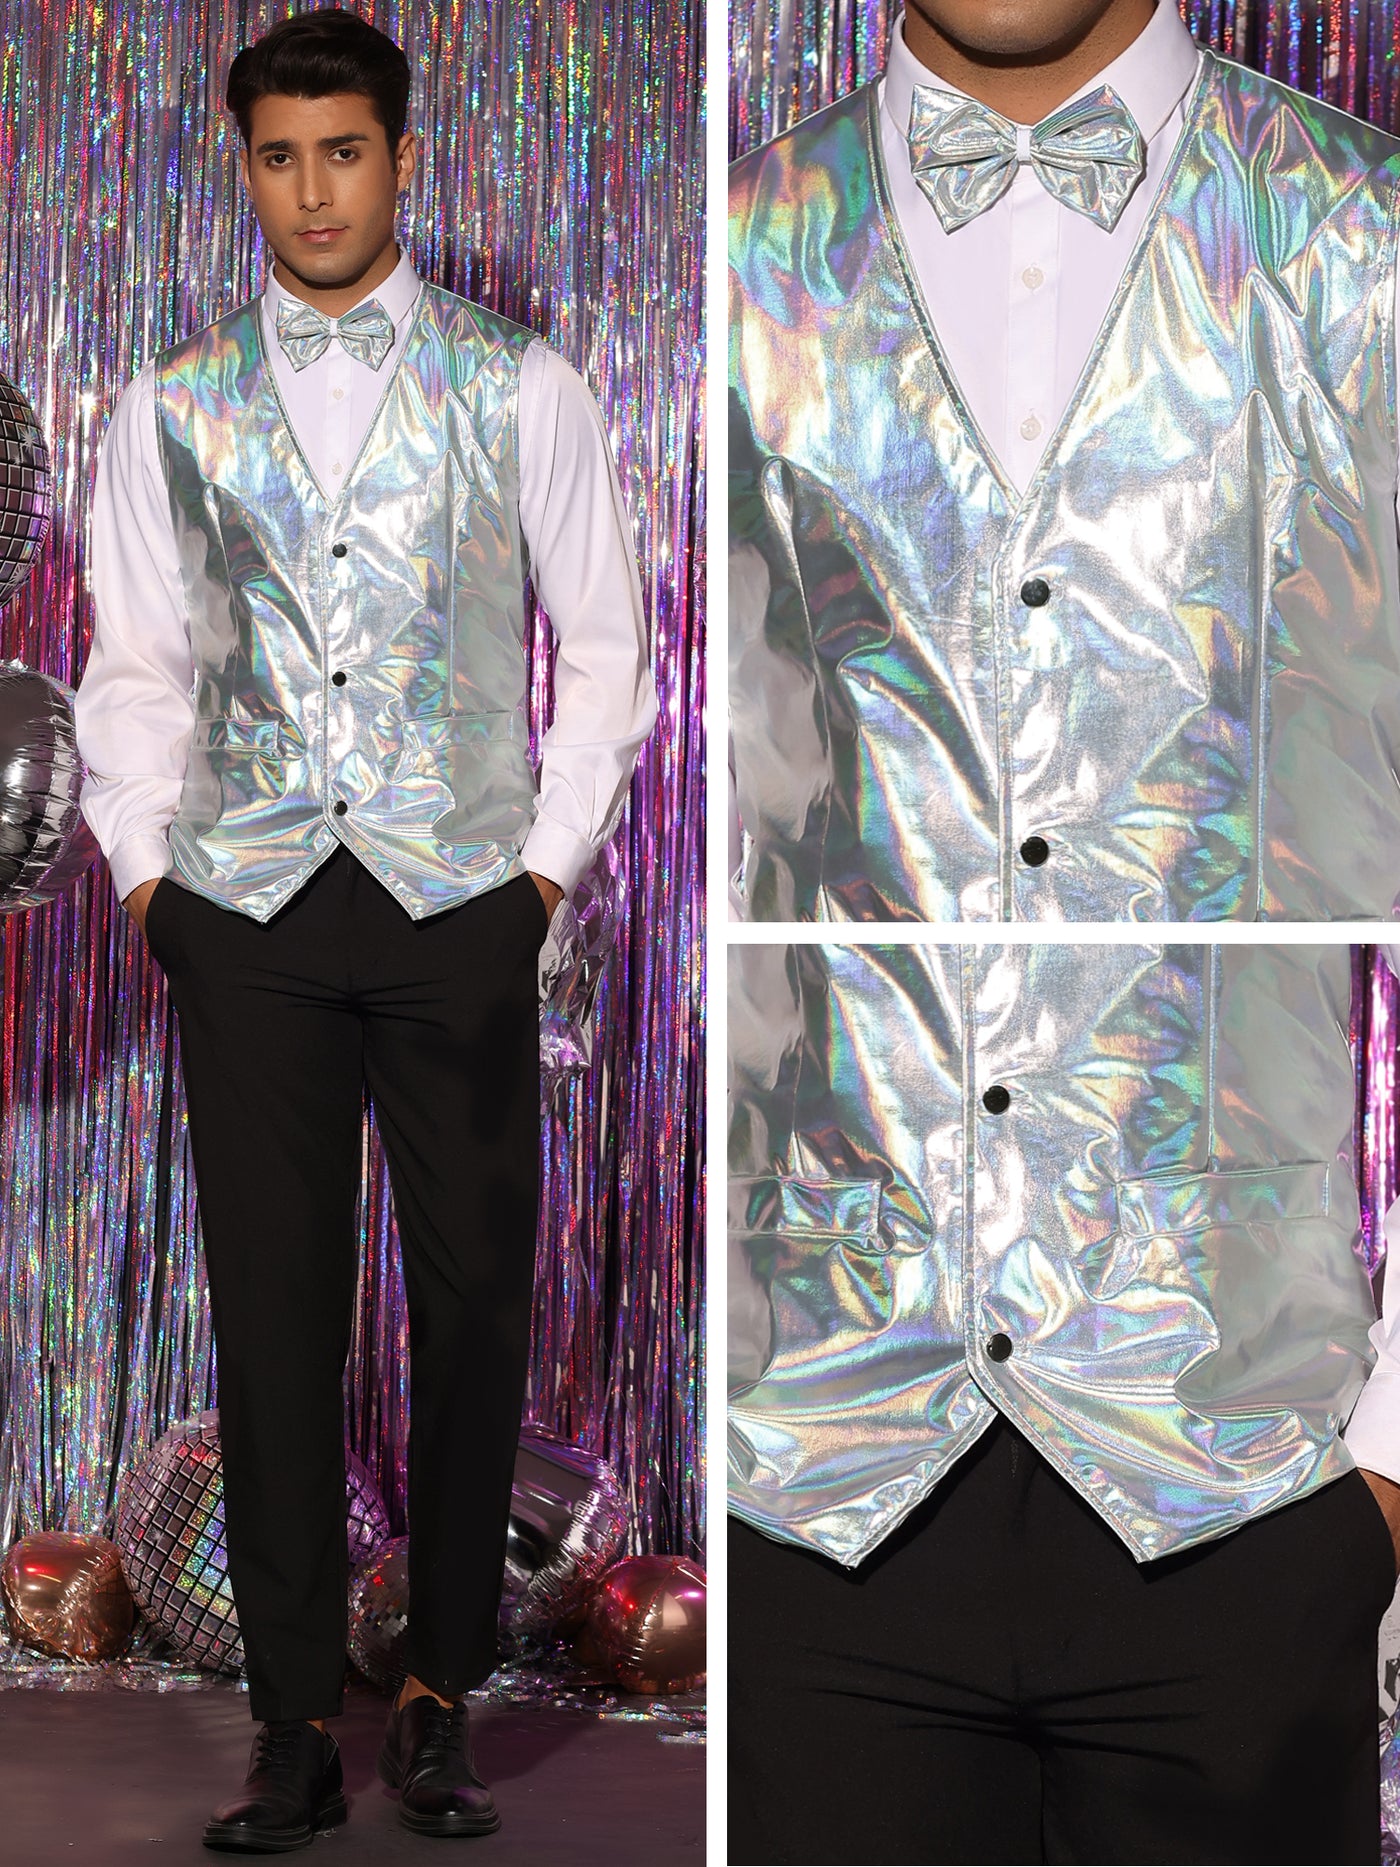 Bublédon Holographic Vest for Men's V-Neck Slim Fit Shiny Disco Party Sleeveless Waistcoat Bowtie